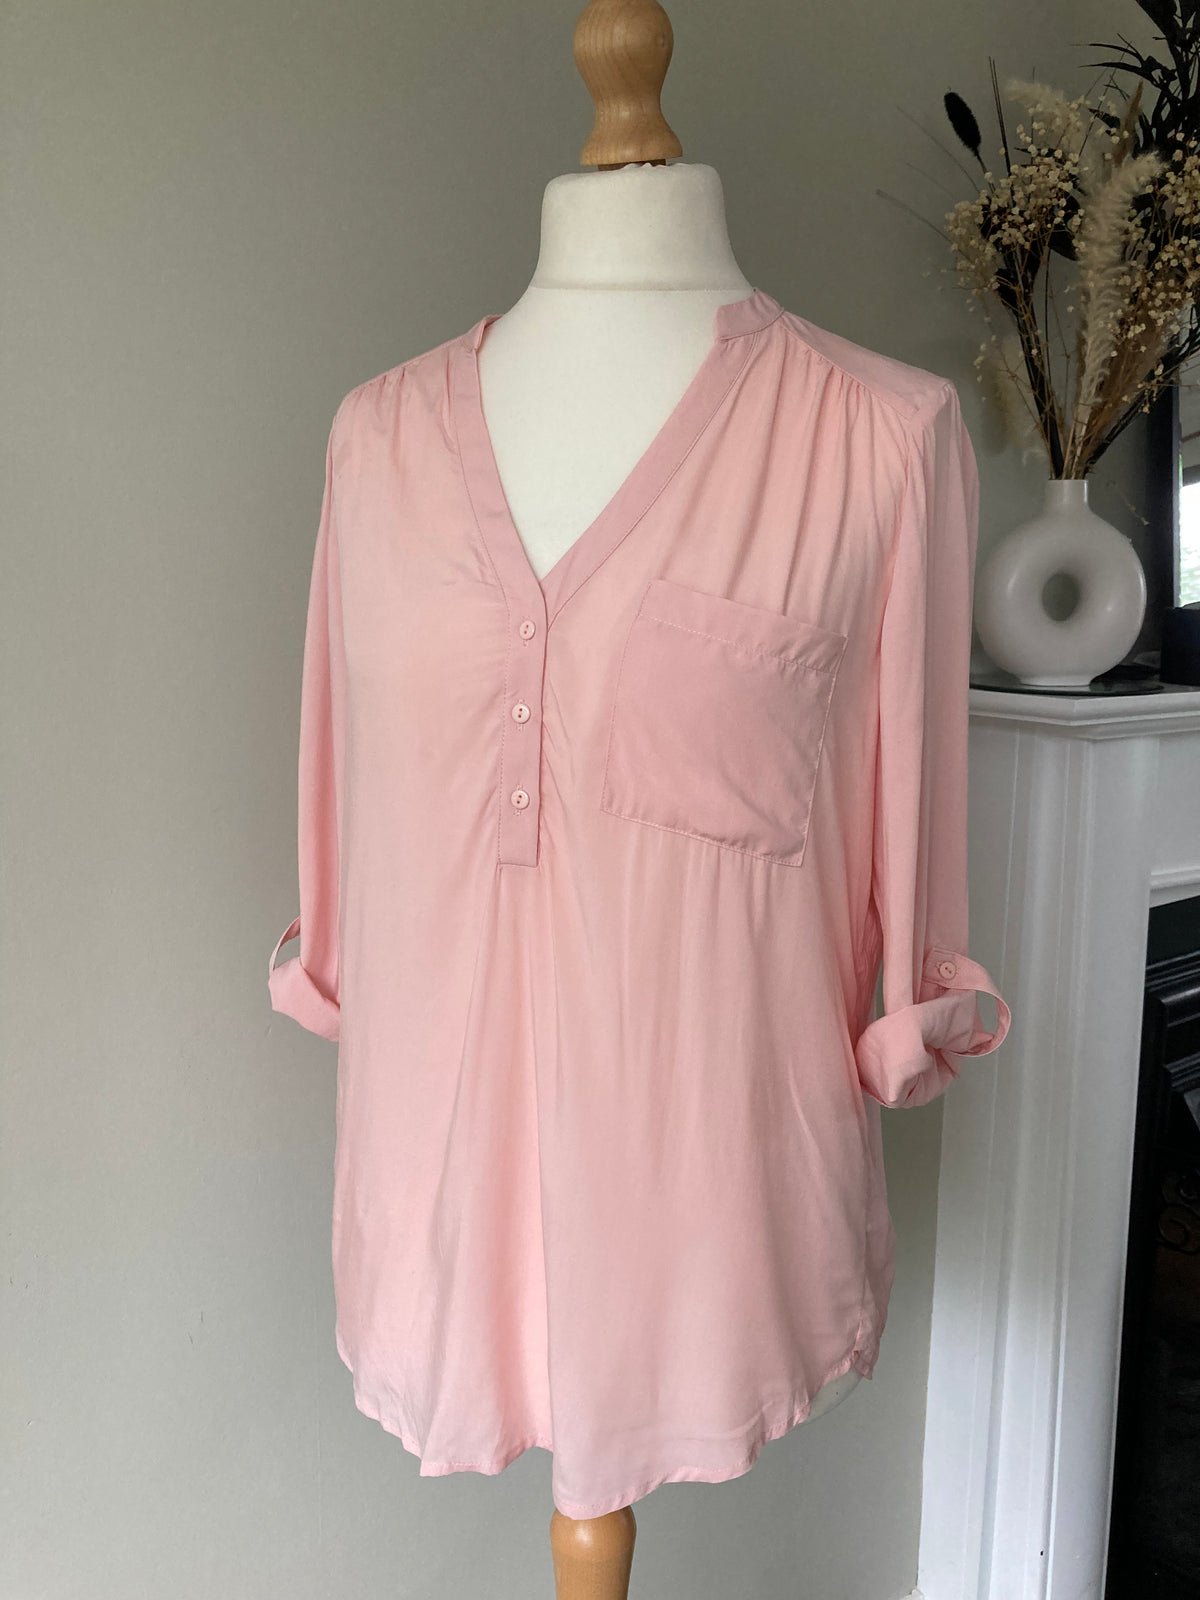 Pink blouse by Lascana - Size 12